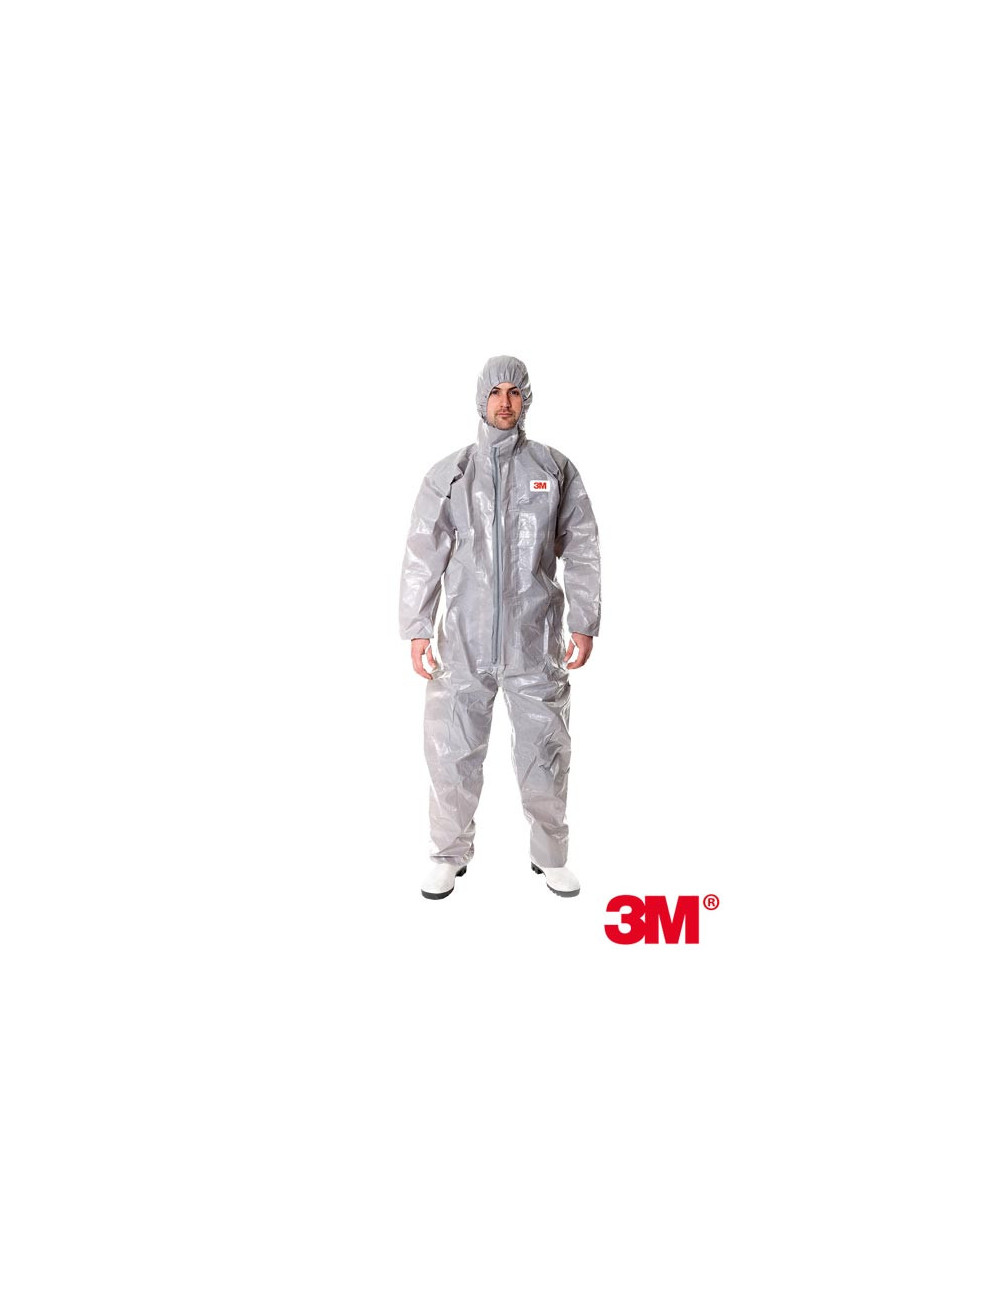 Protective suit s gray/steel 3M 3m-kom-4570